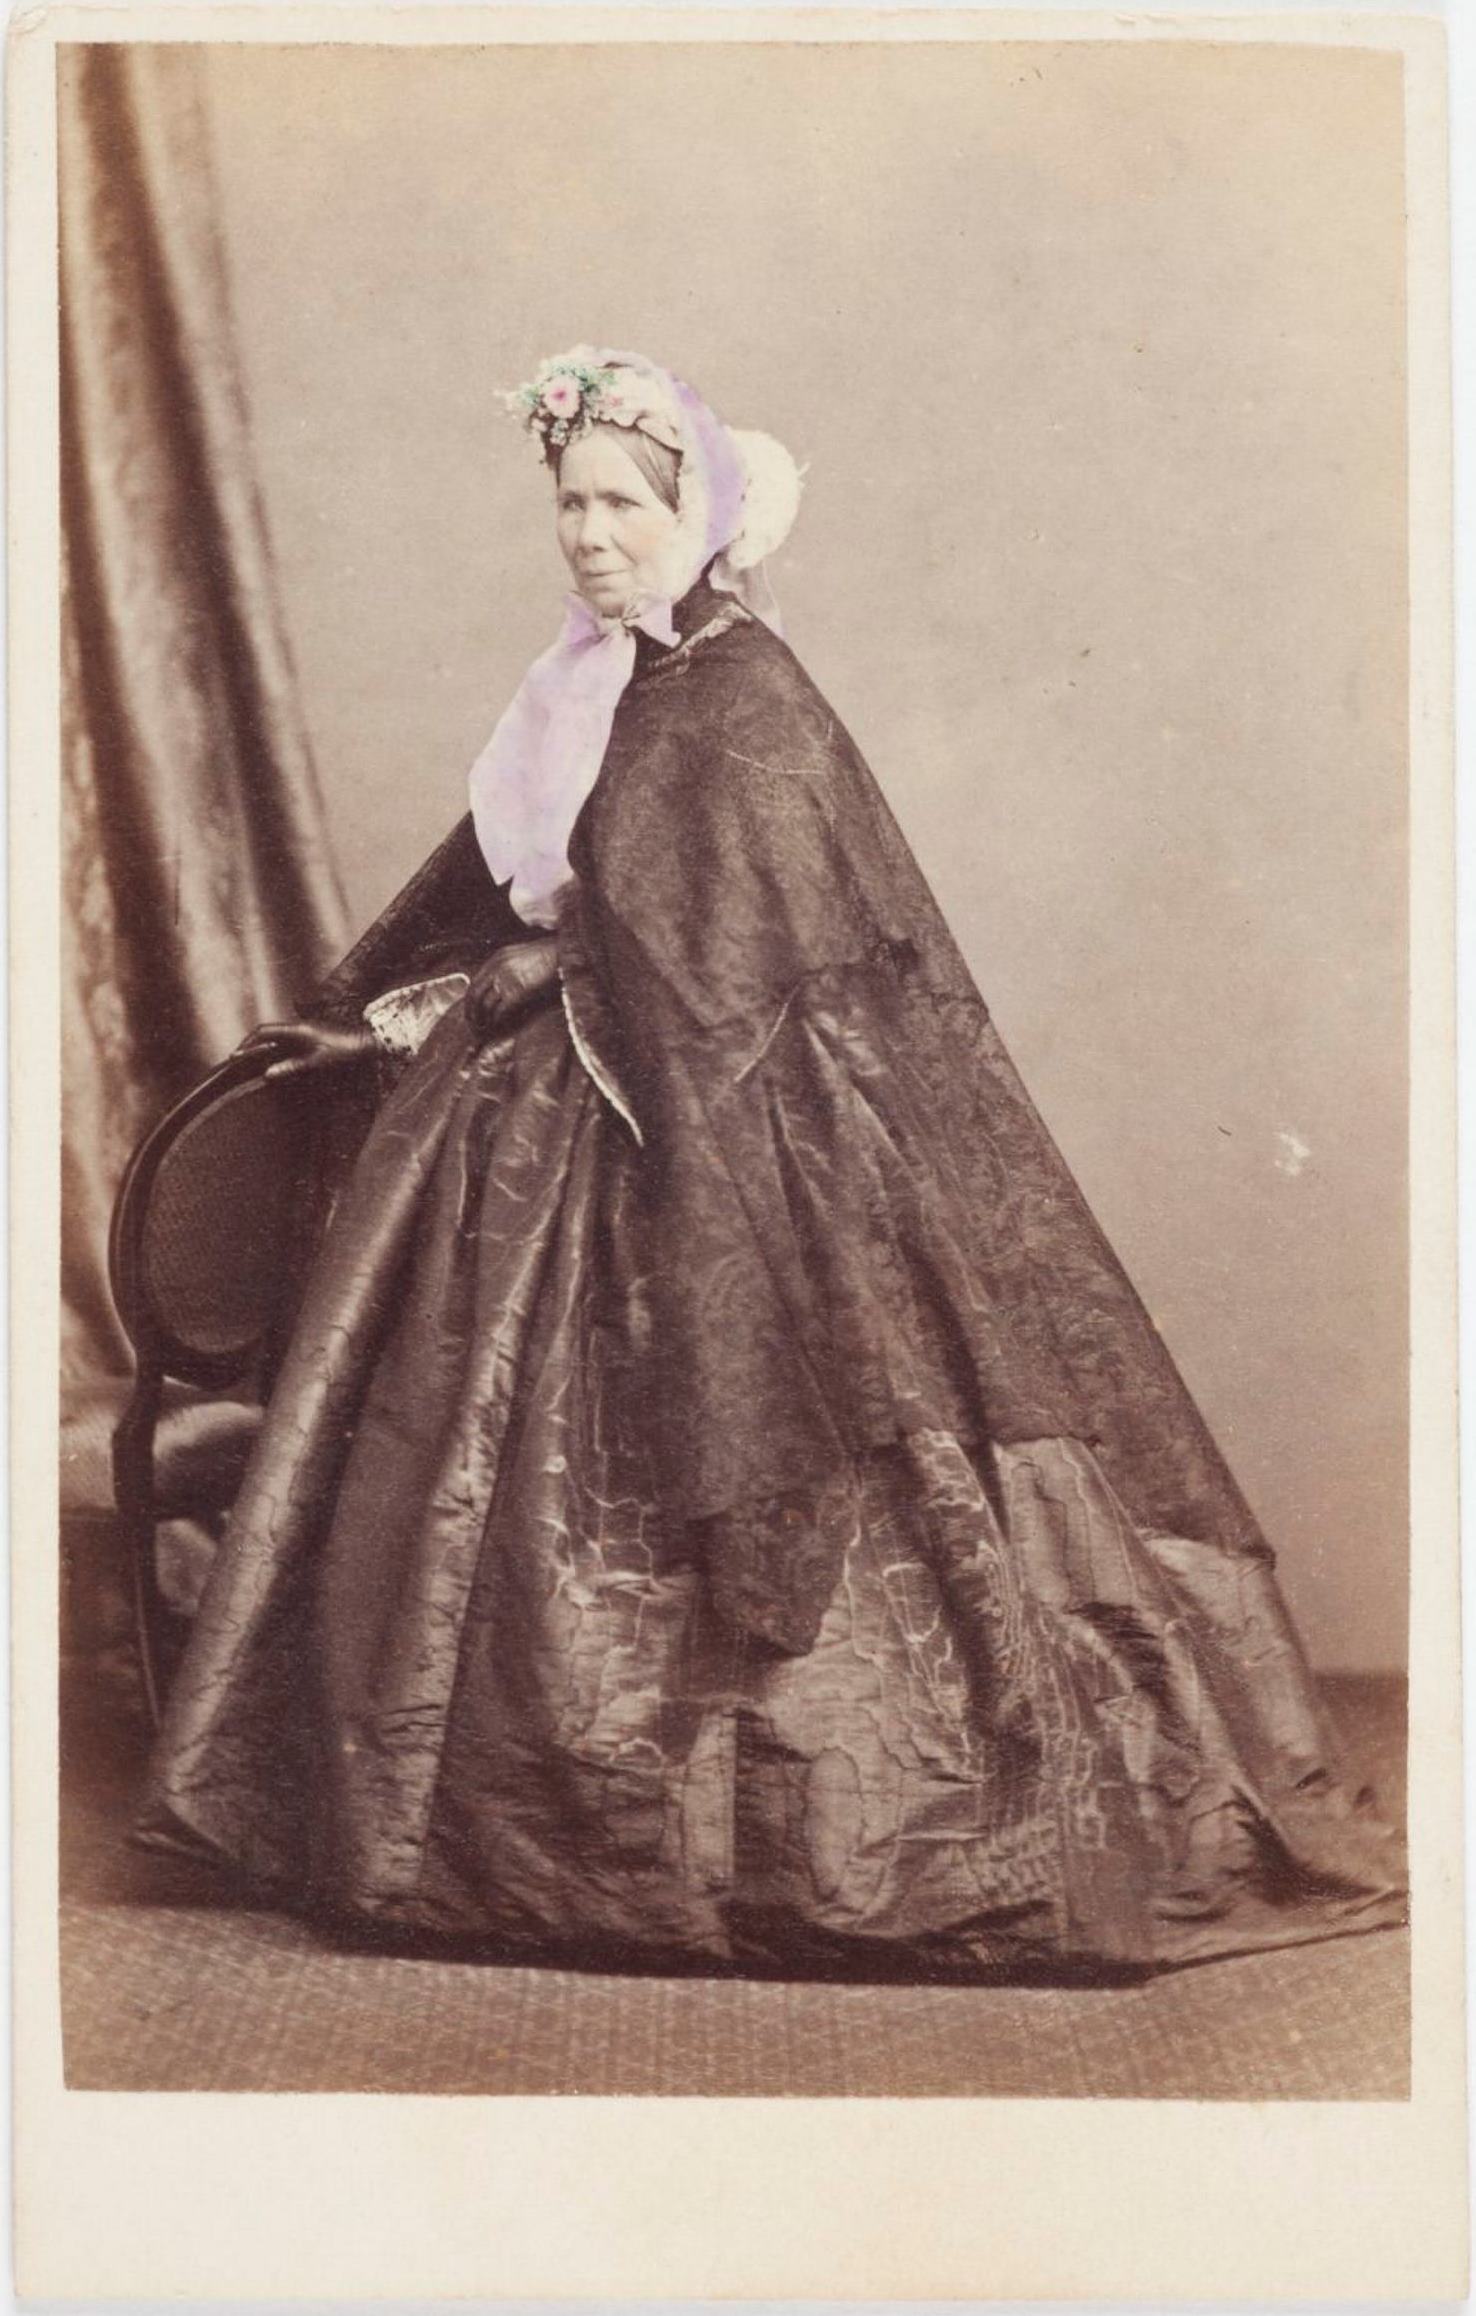 Jane Kennerley (1809-1877), around 1870 / Chas. A. Woolley, photographer